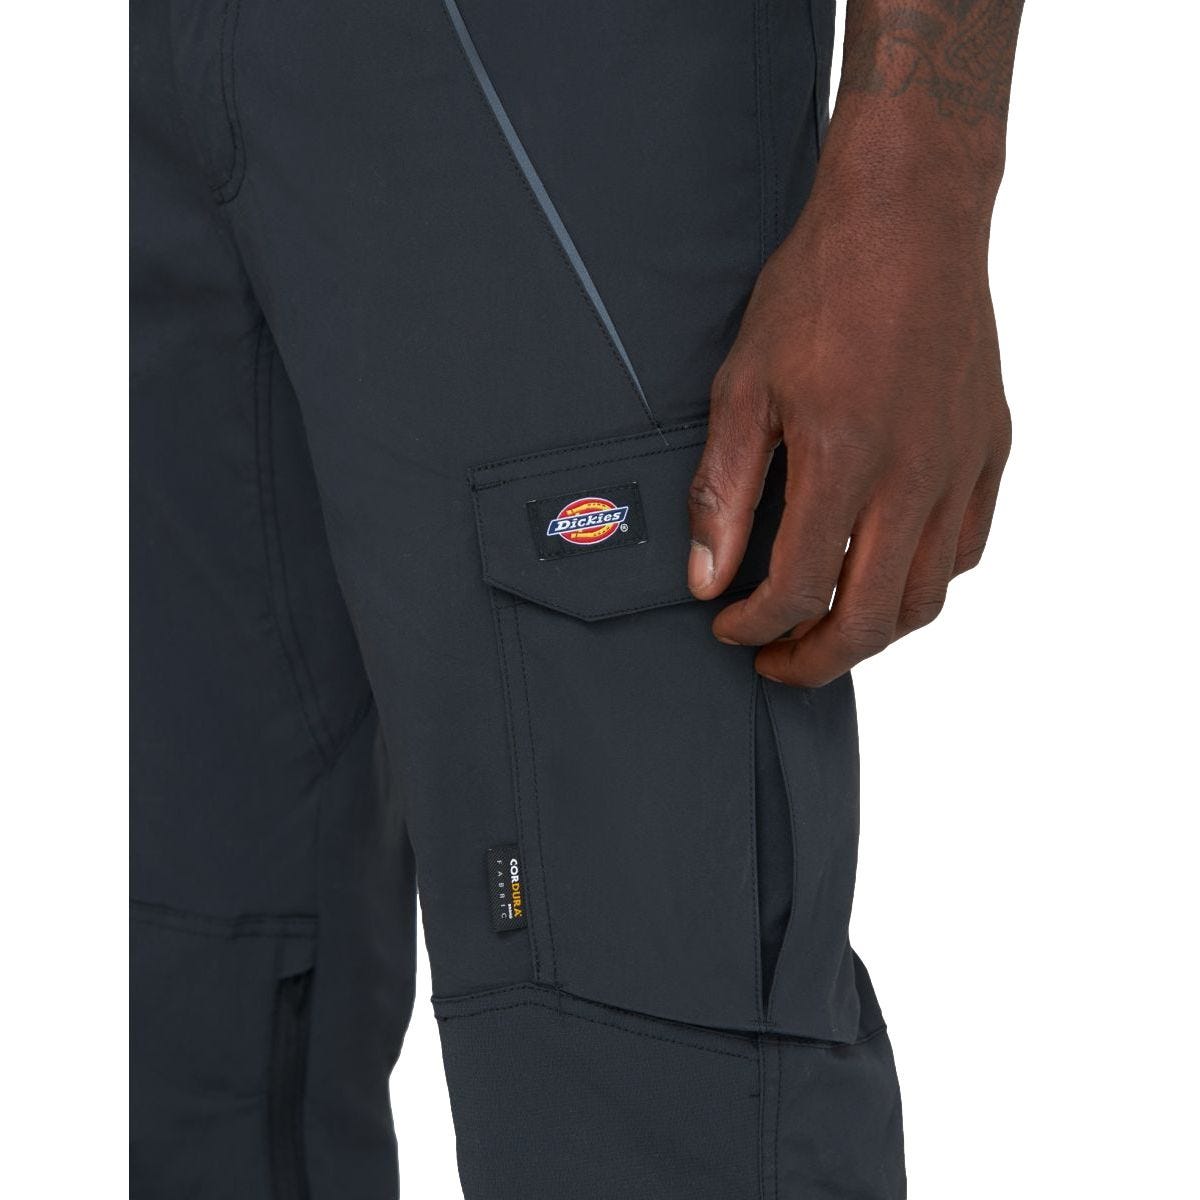 Pantalon léger Flex Noir - Dickies - Taille 44 4